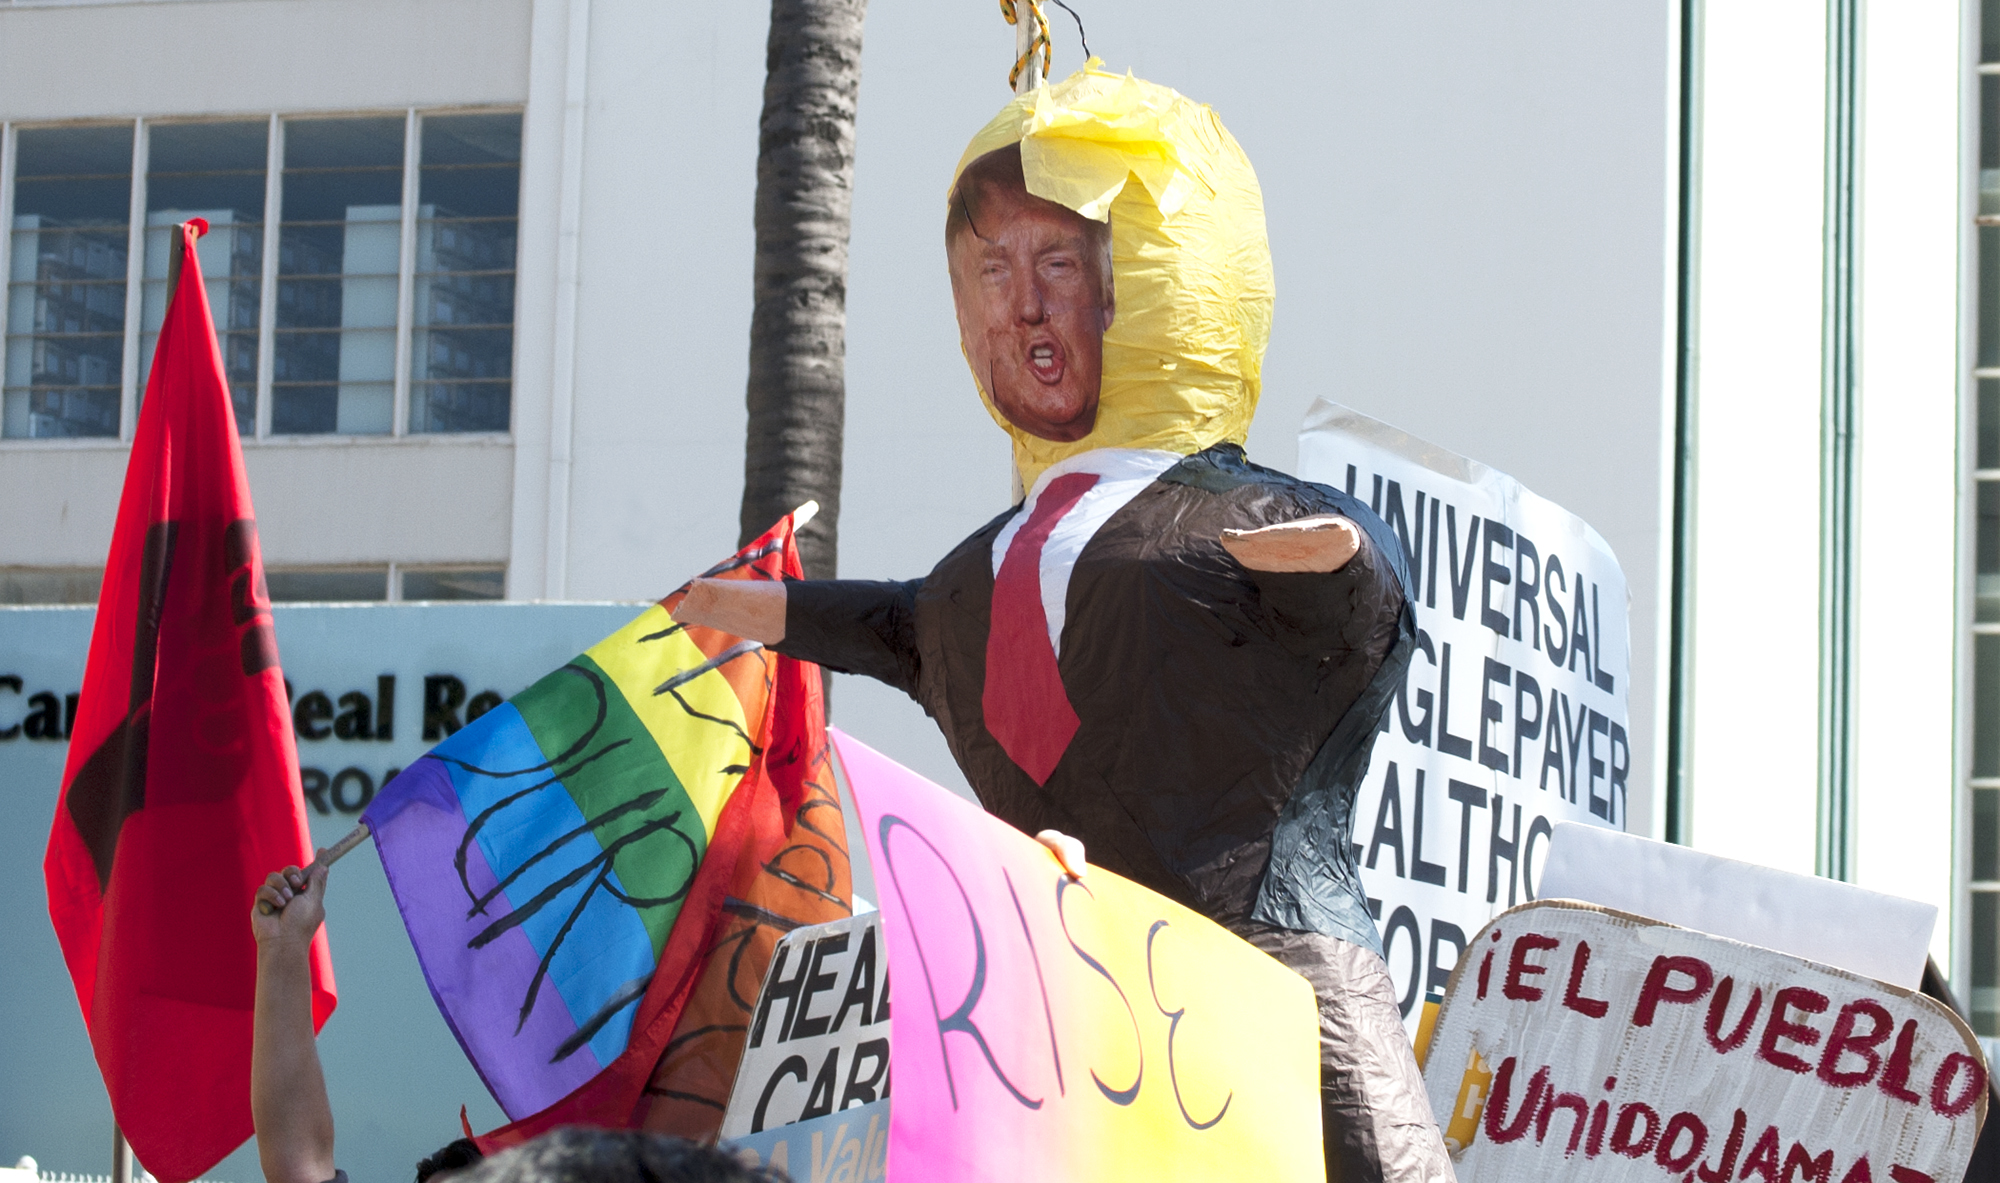 A Donald Trump Piñata floats above the crowd.